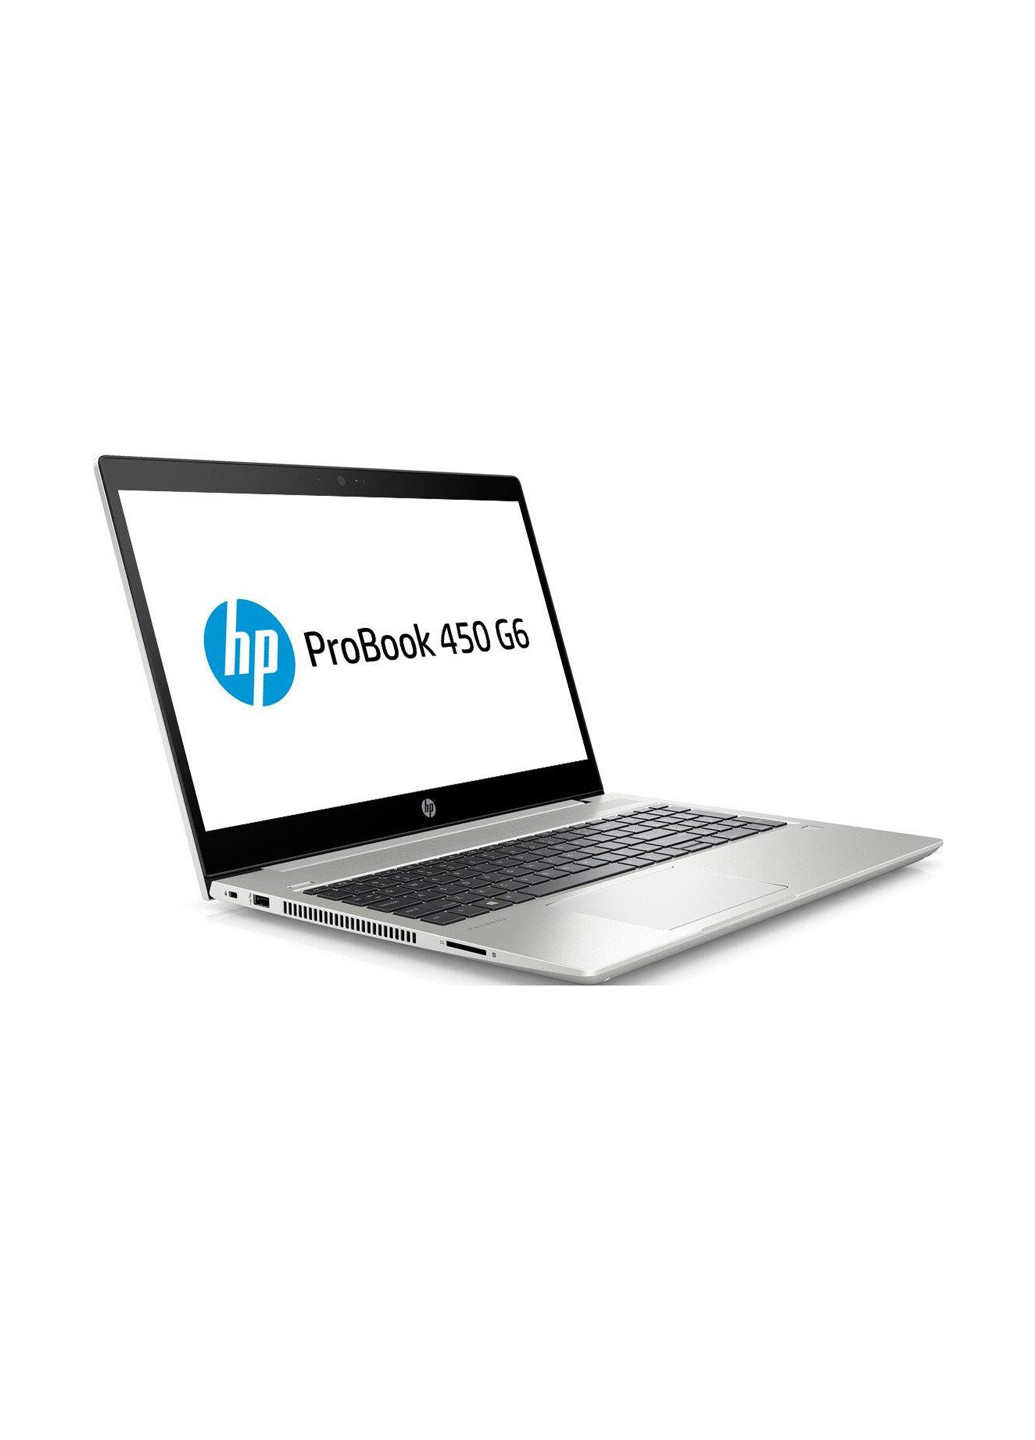 Ноутбук HP probook 450 g6 (4sz43av_v9) silver (158838159)